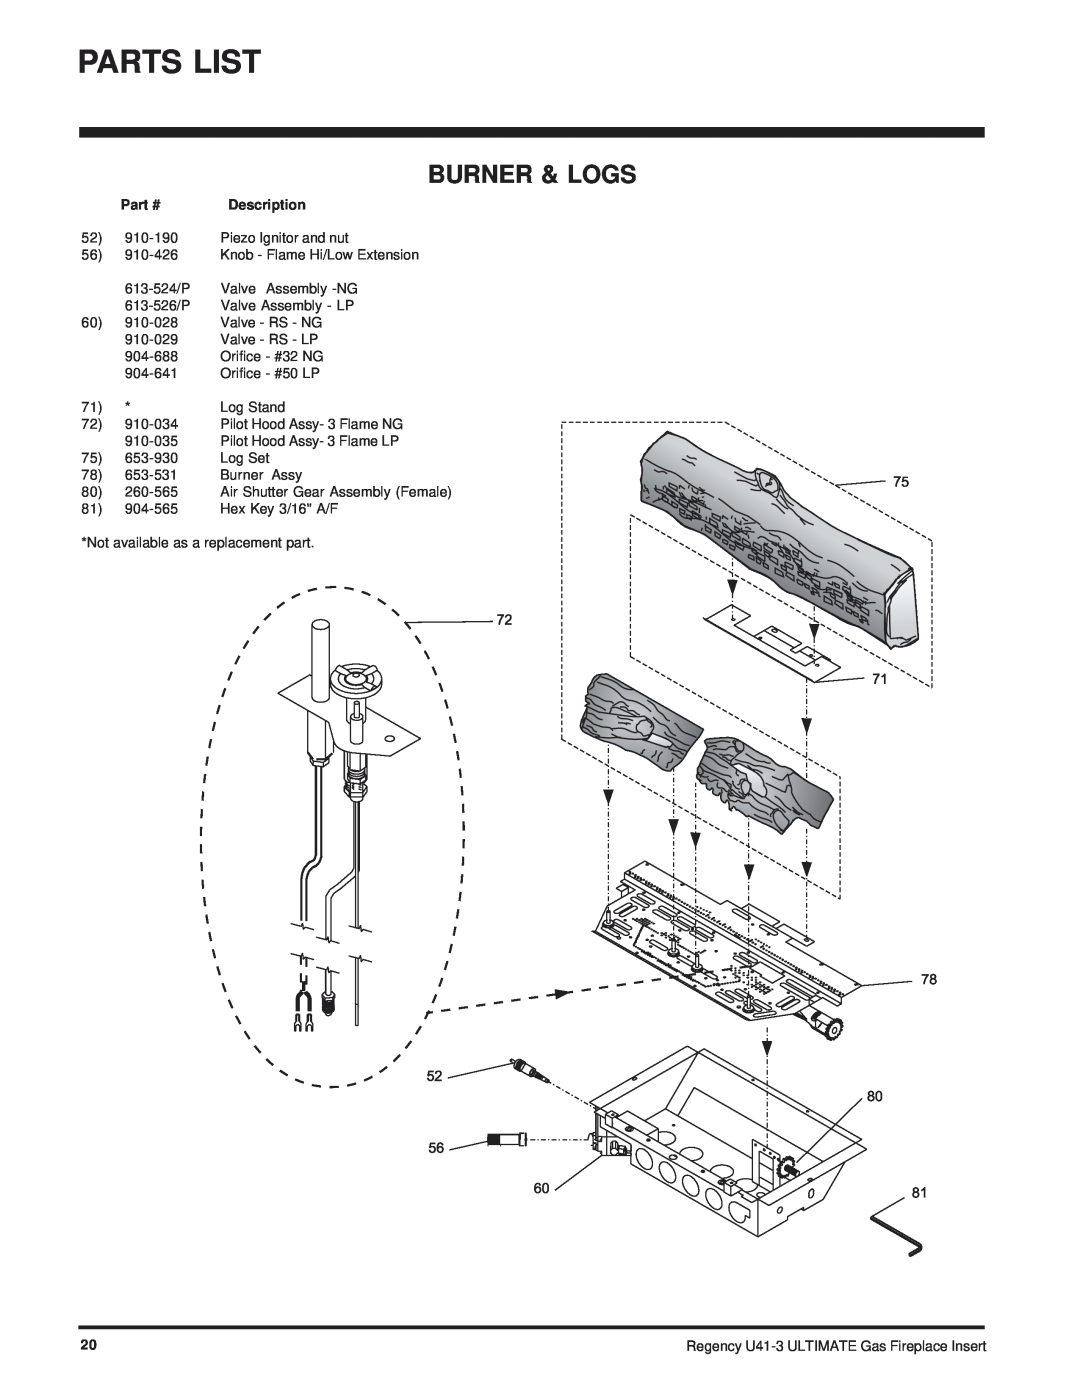 Regency U41-NG3, U41-LP3 installation manual Burner & Logs, Part # 